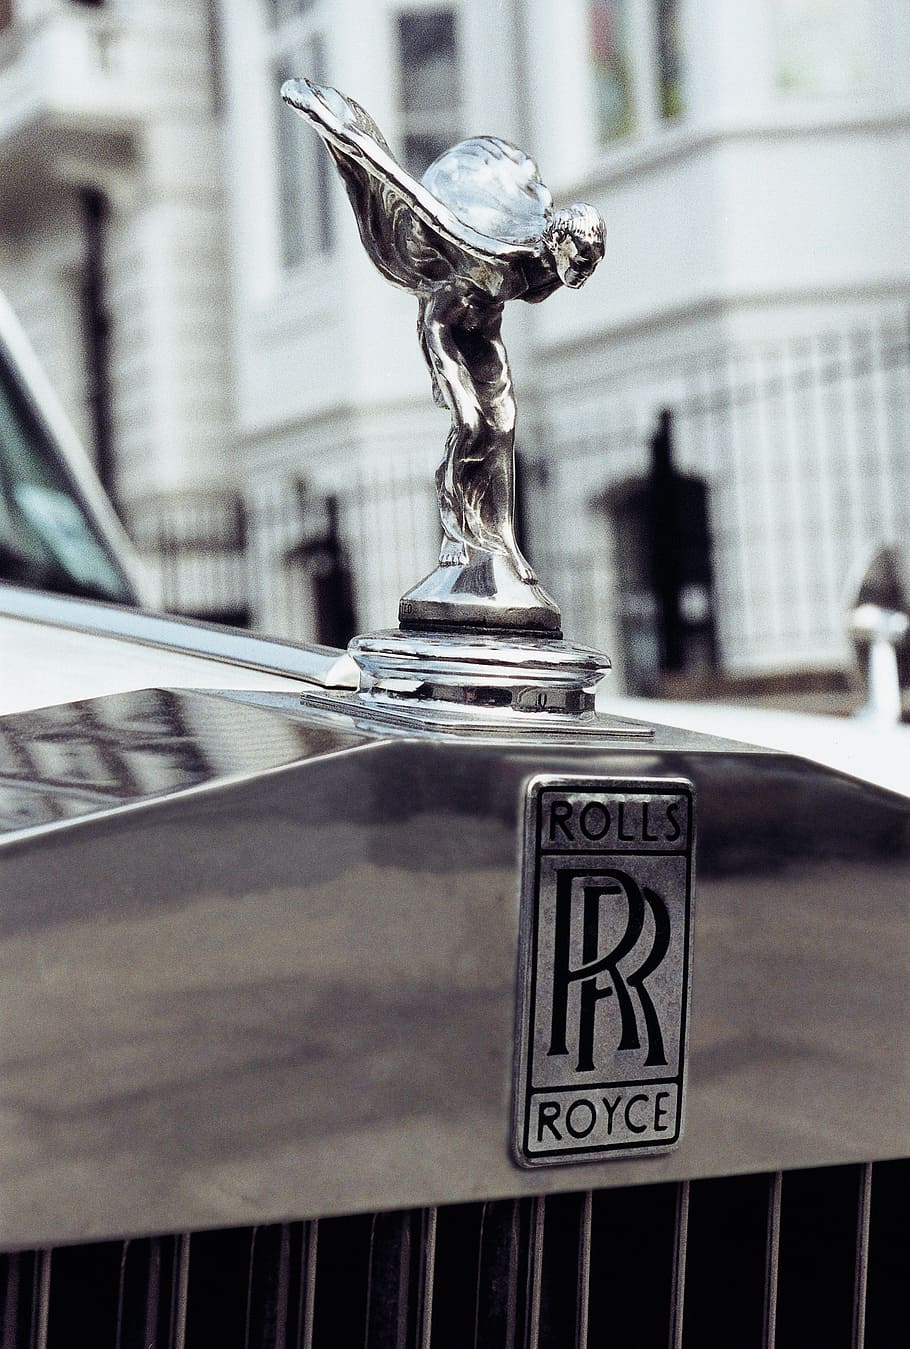 gray Rolls Royce vehicle hood ornament, cool figure, spirit of ecstasy